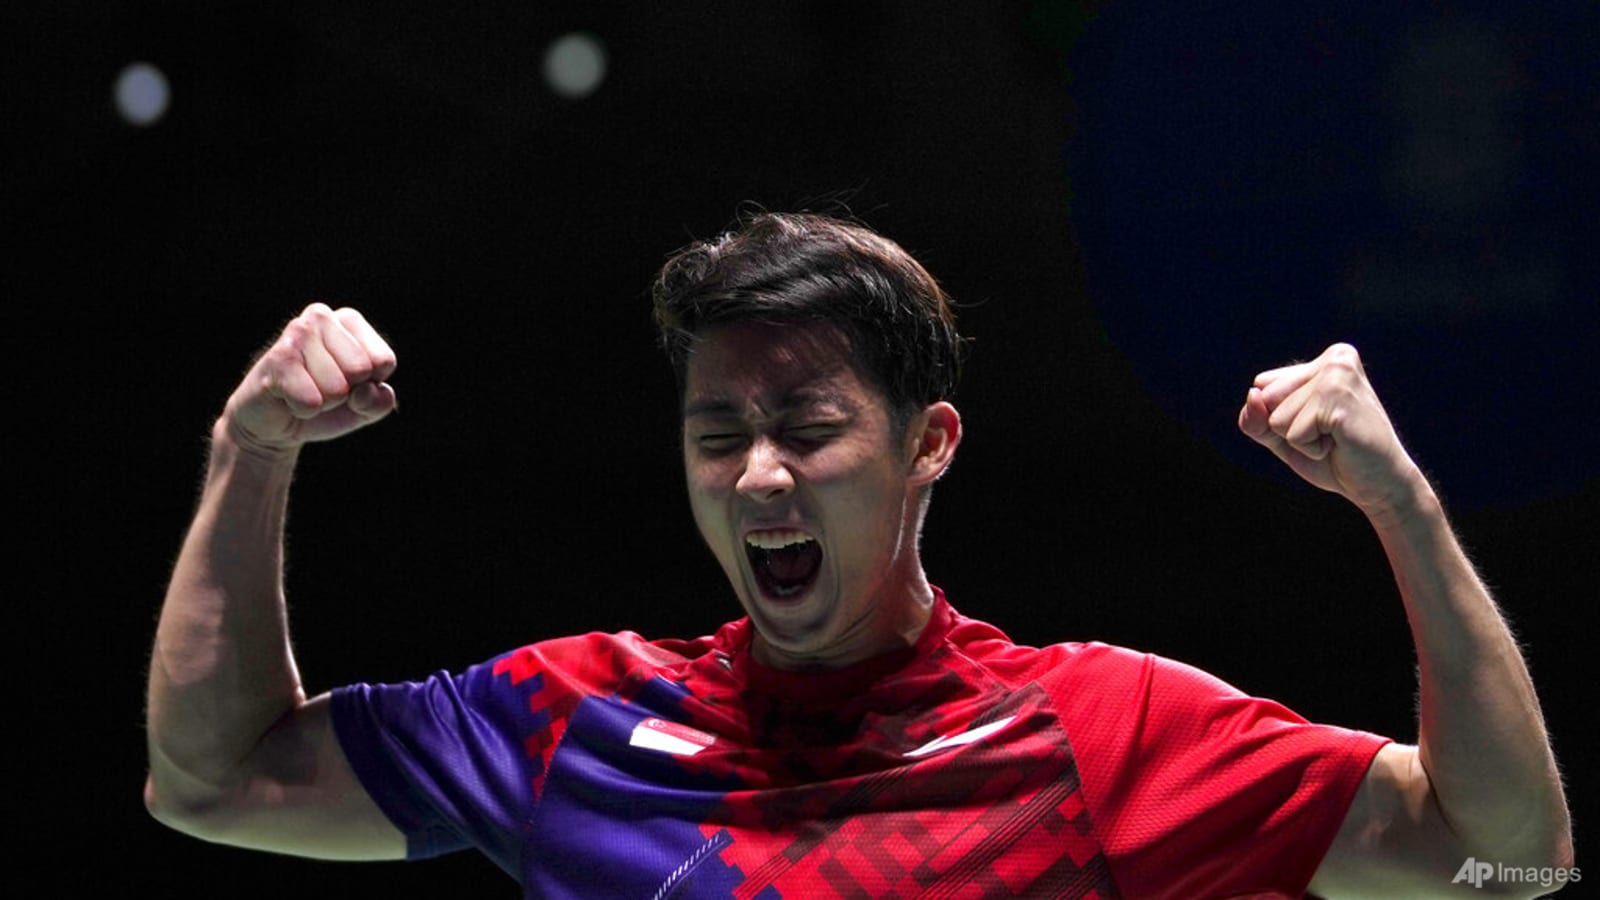 Commentary: Loh Kean Yew’s smashing World Championships win is no fluke